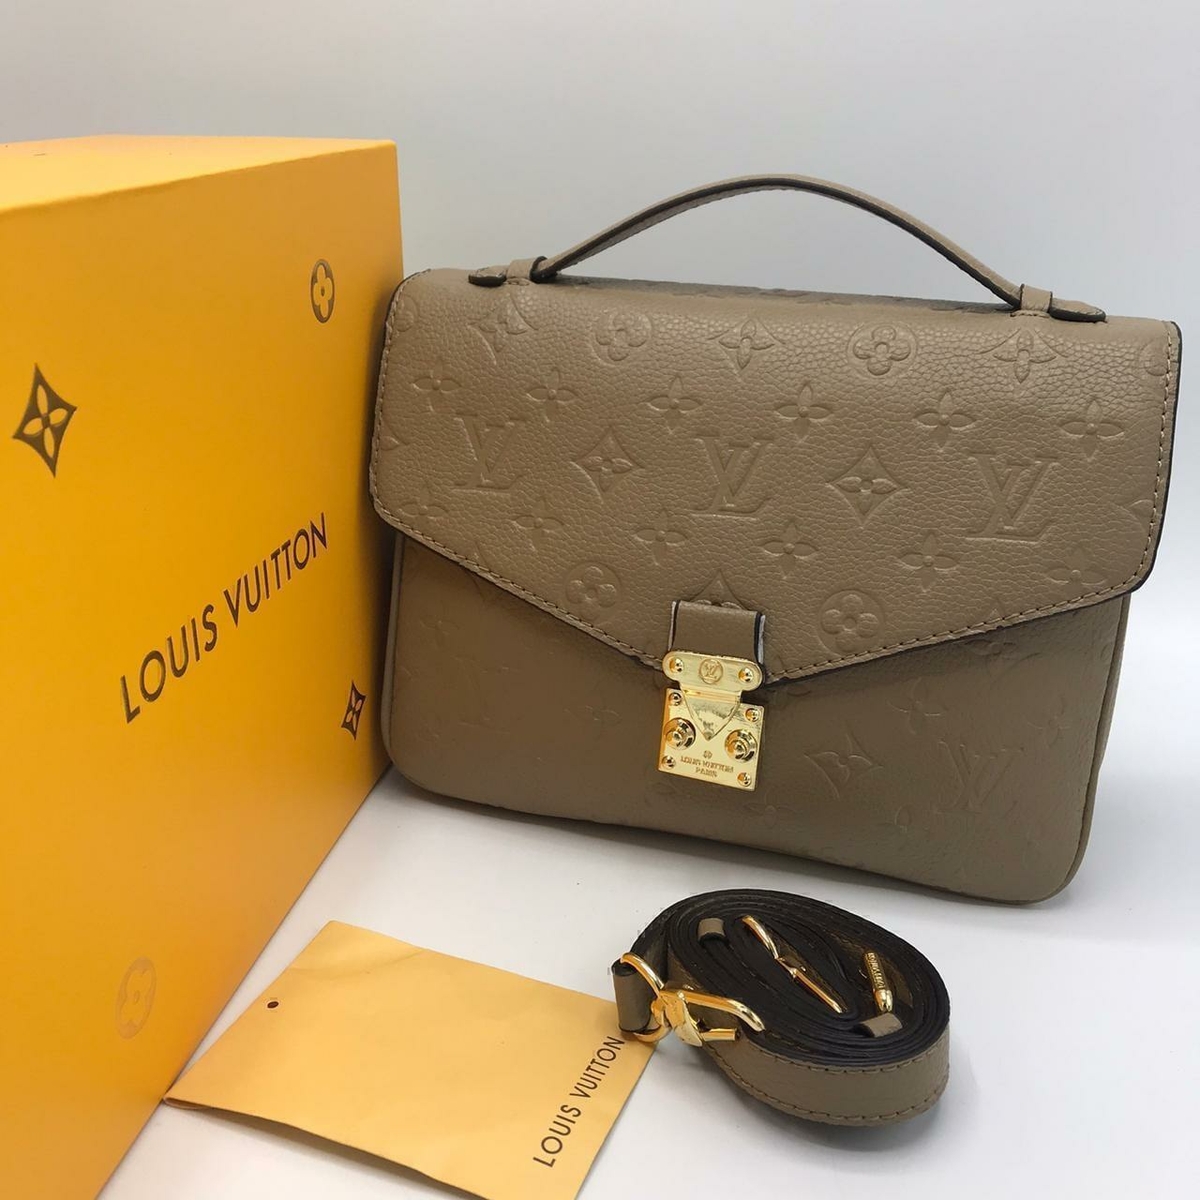 Louis Vuitton сумка #1 в «Globestyle» арт.2815NJ